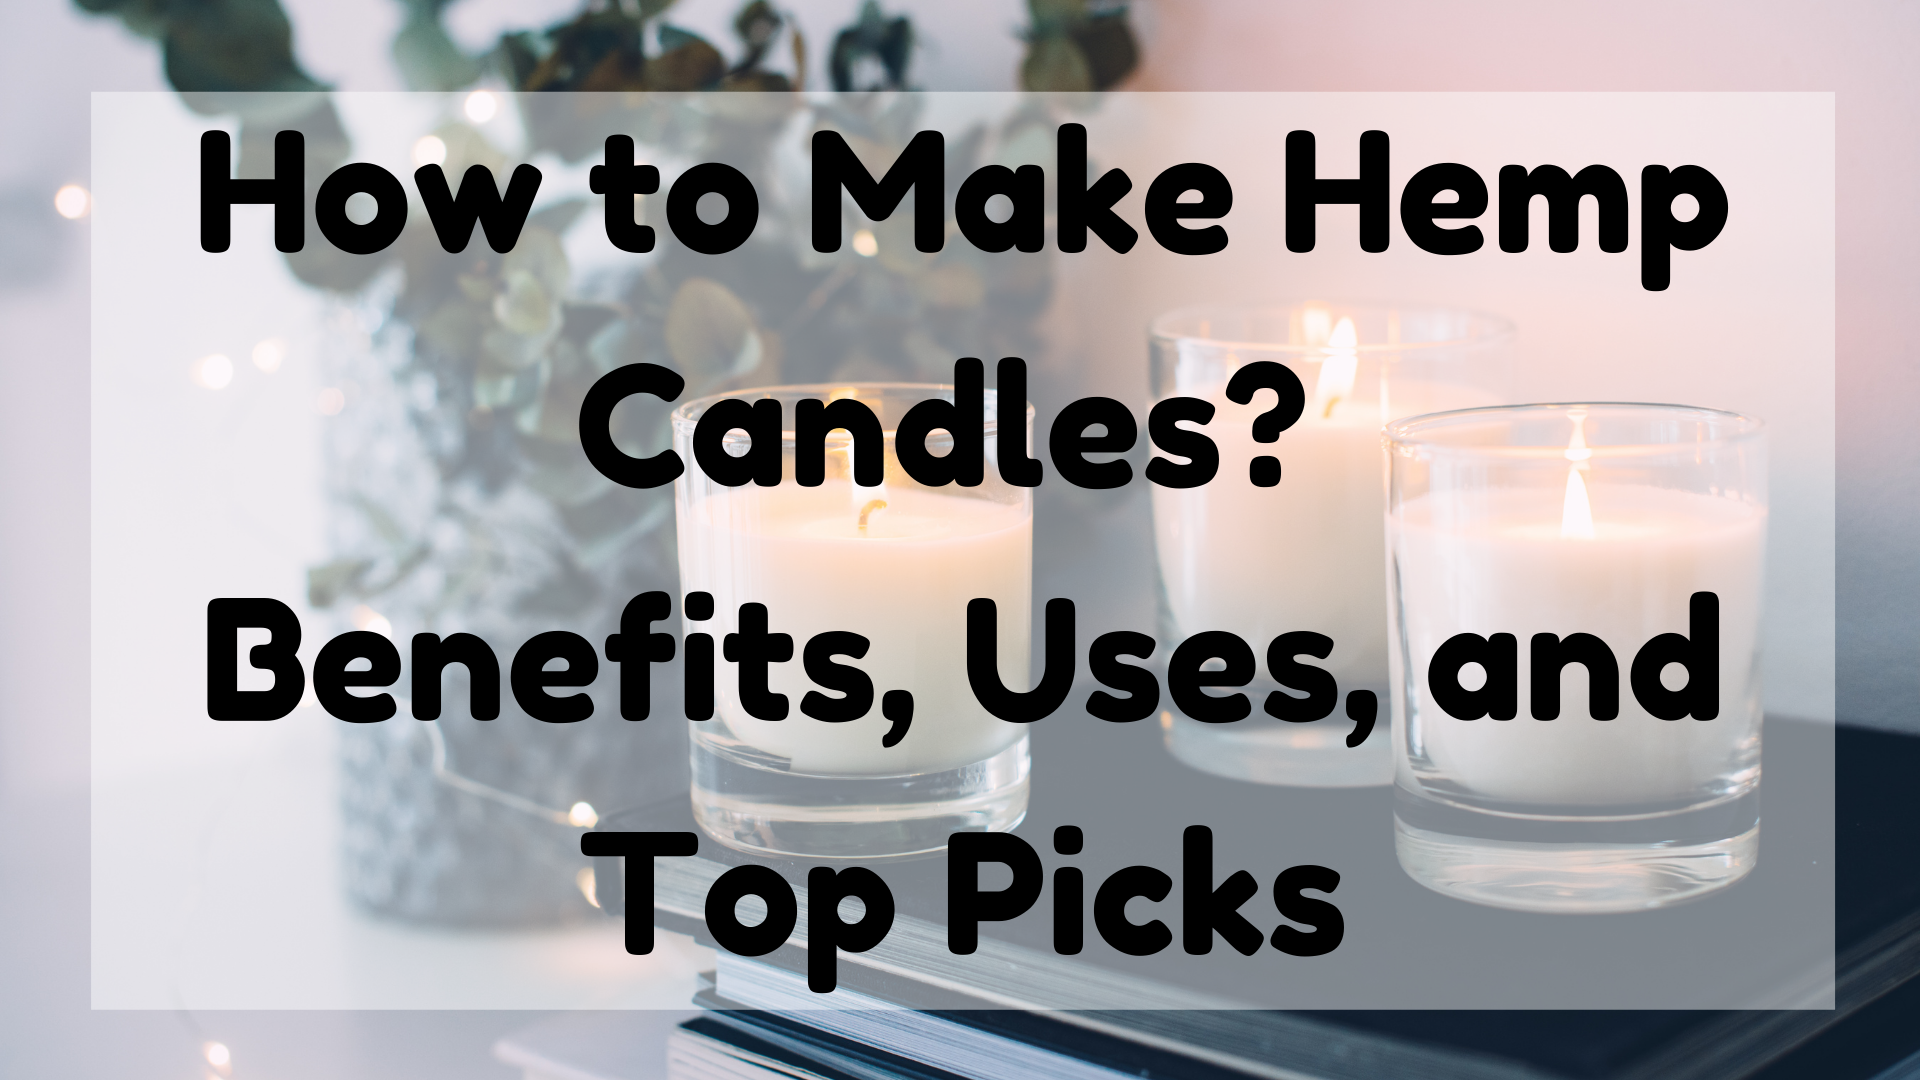 How to Make Hemp Candles